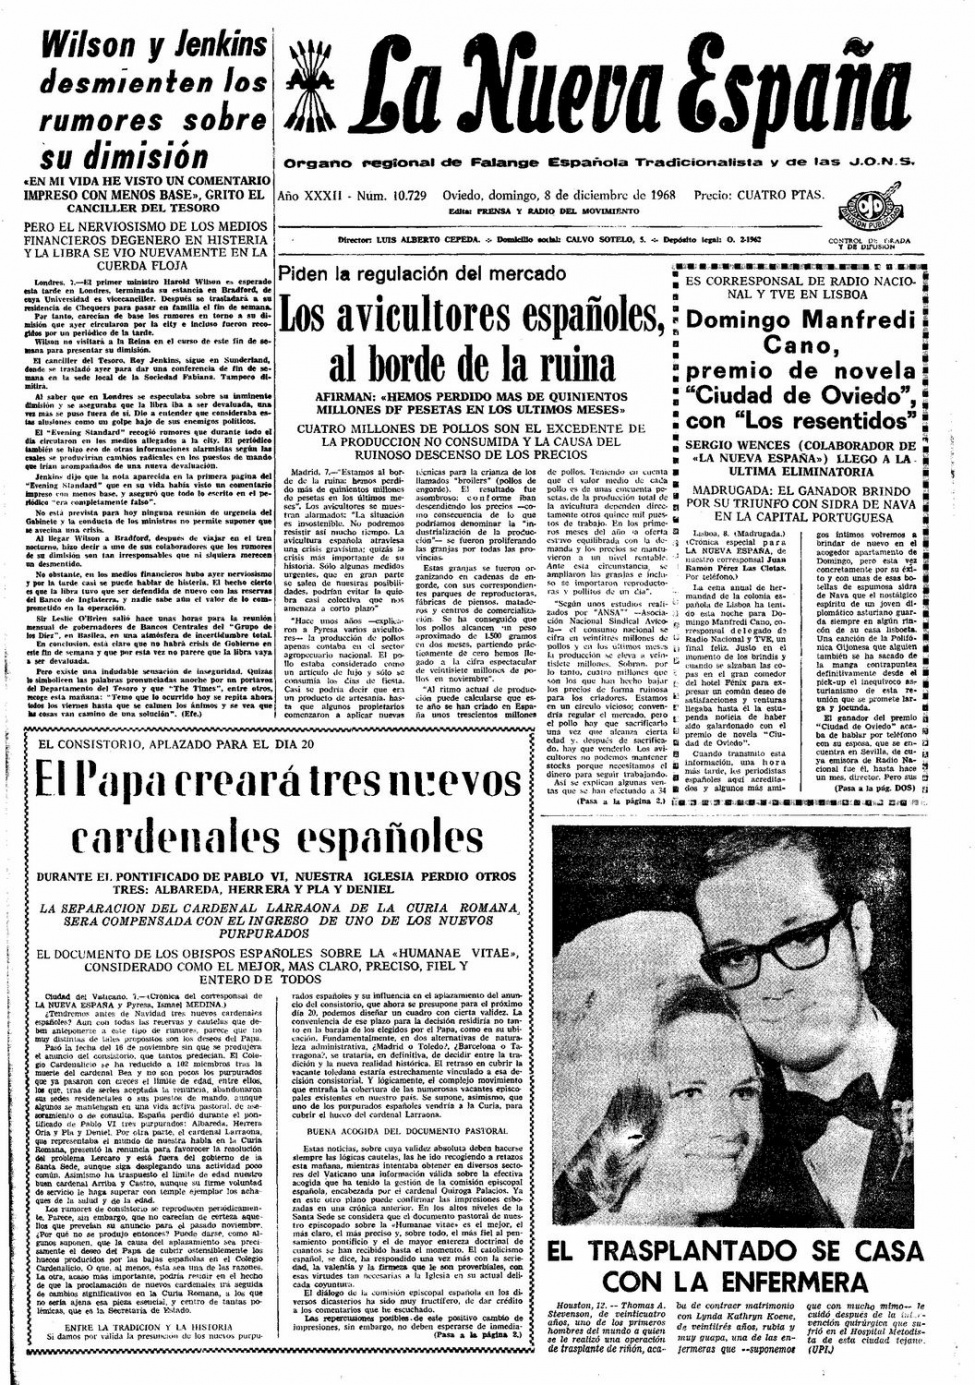 Portada del Domingo, 8 de Diciembre de 1968